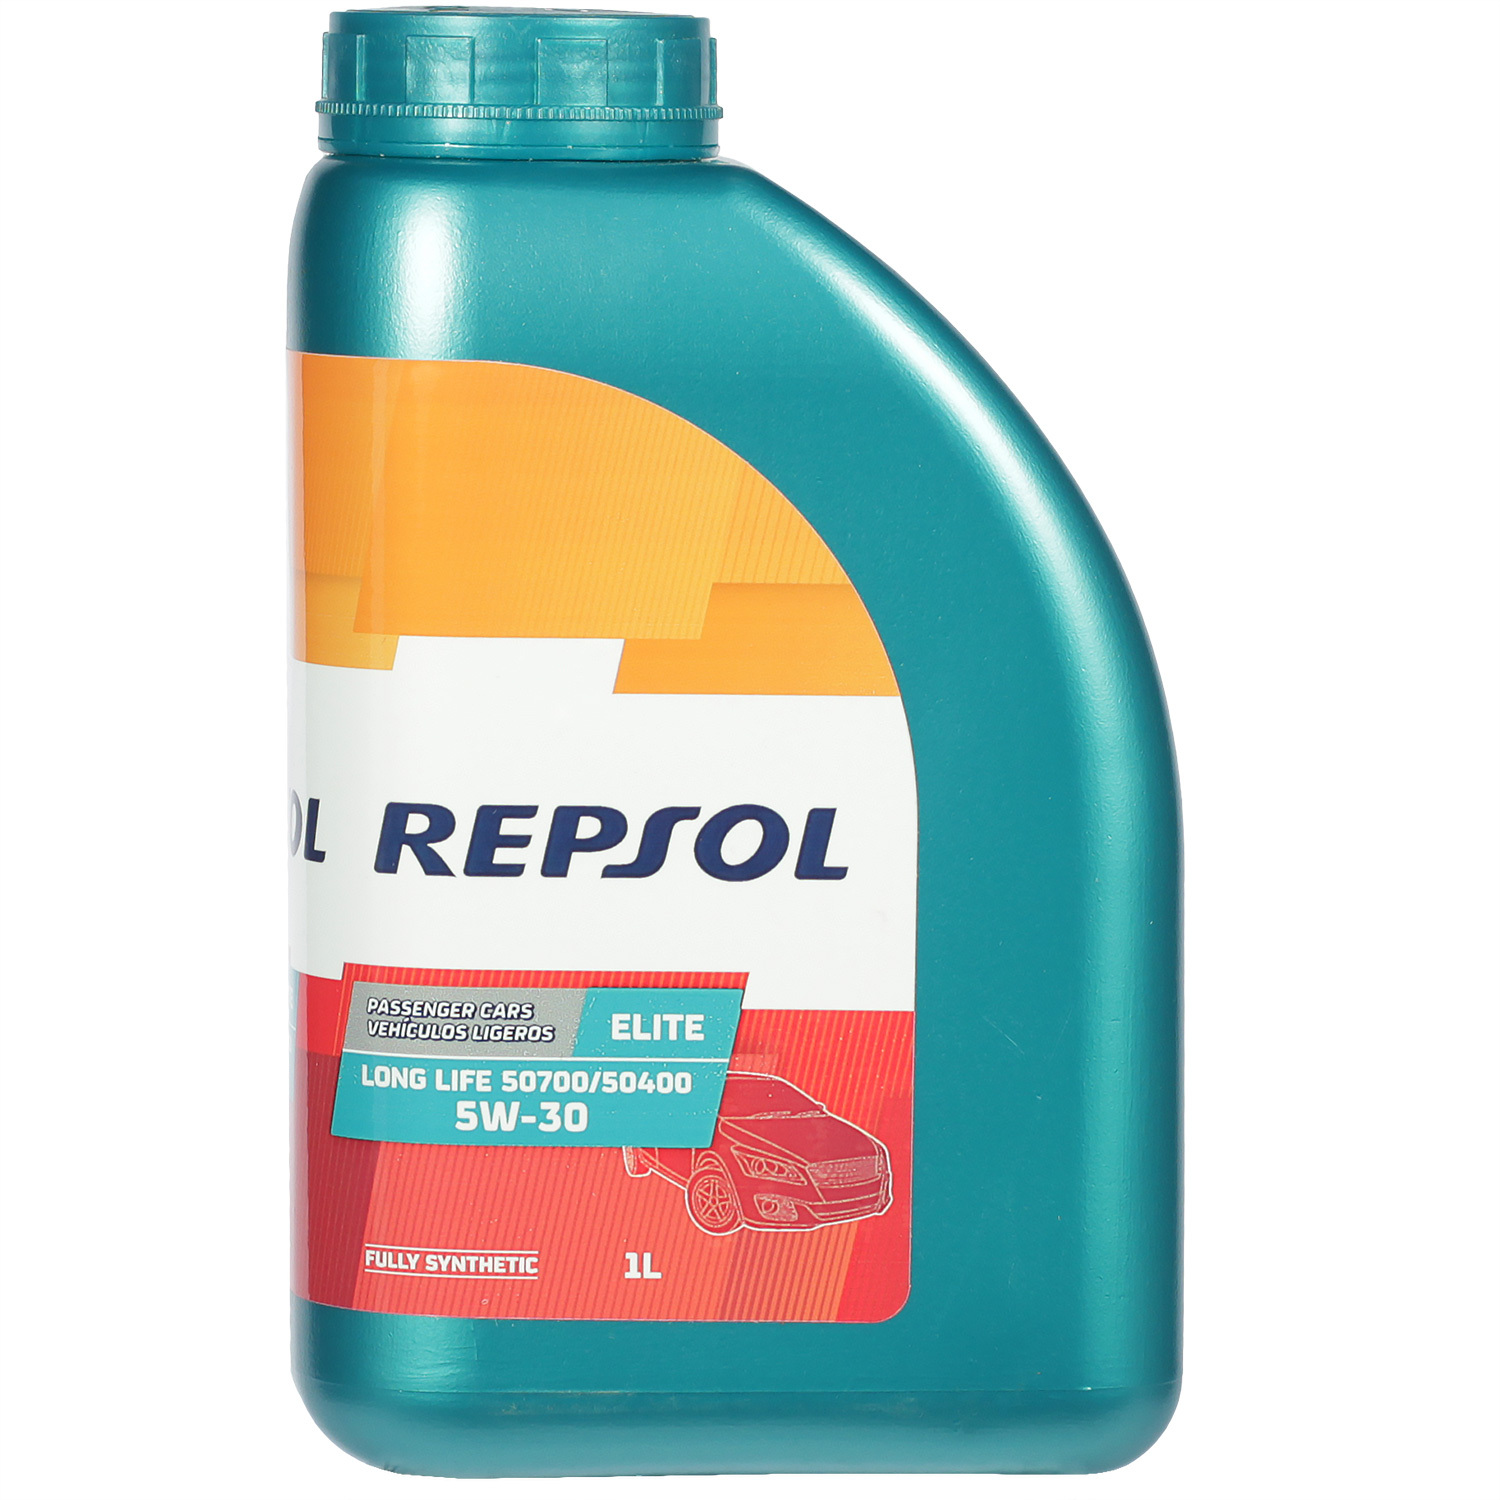 Repsol Моторное масло Repsol Elite LONG LIFE 50700/50400 5W-30, 1 л repsol масло моторное repsol elite evolution long life 5w 30 1л